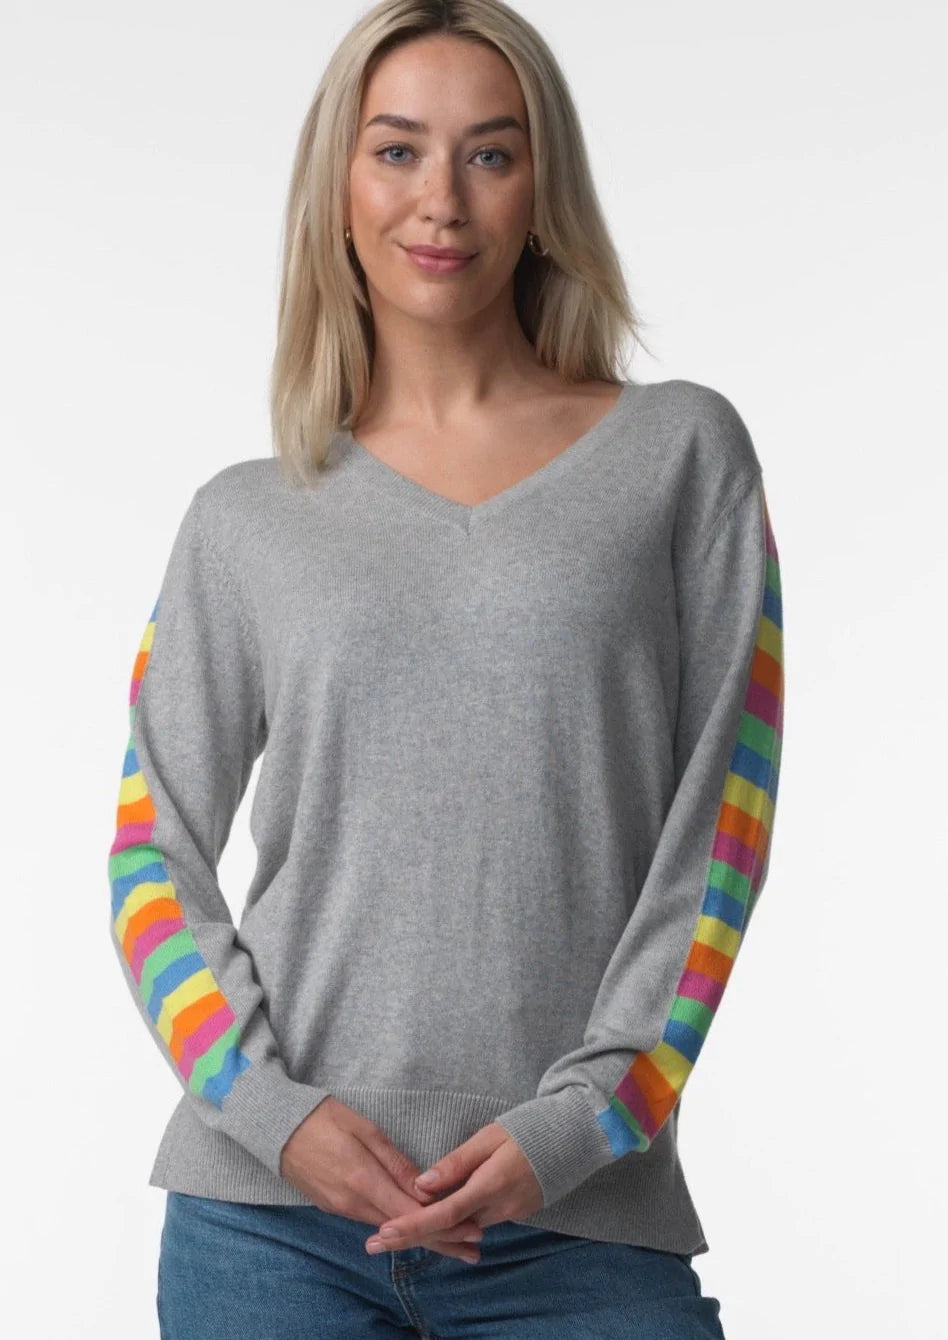 Zaket & Plover Ladder Sleeve Sweater